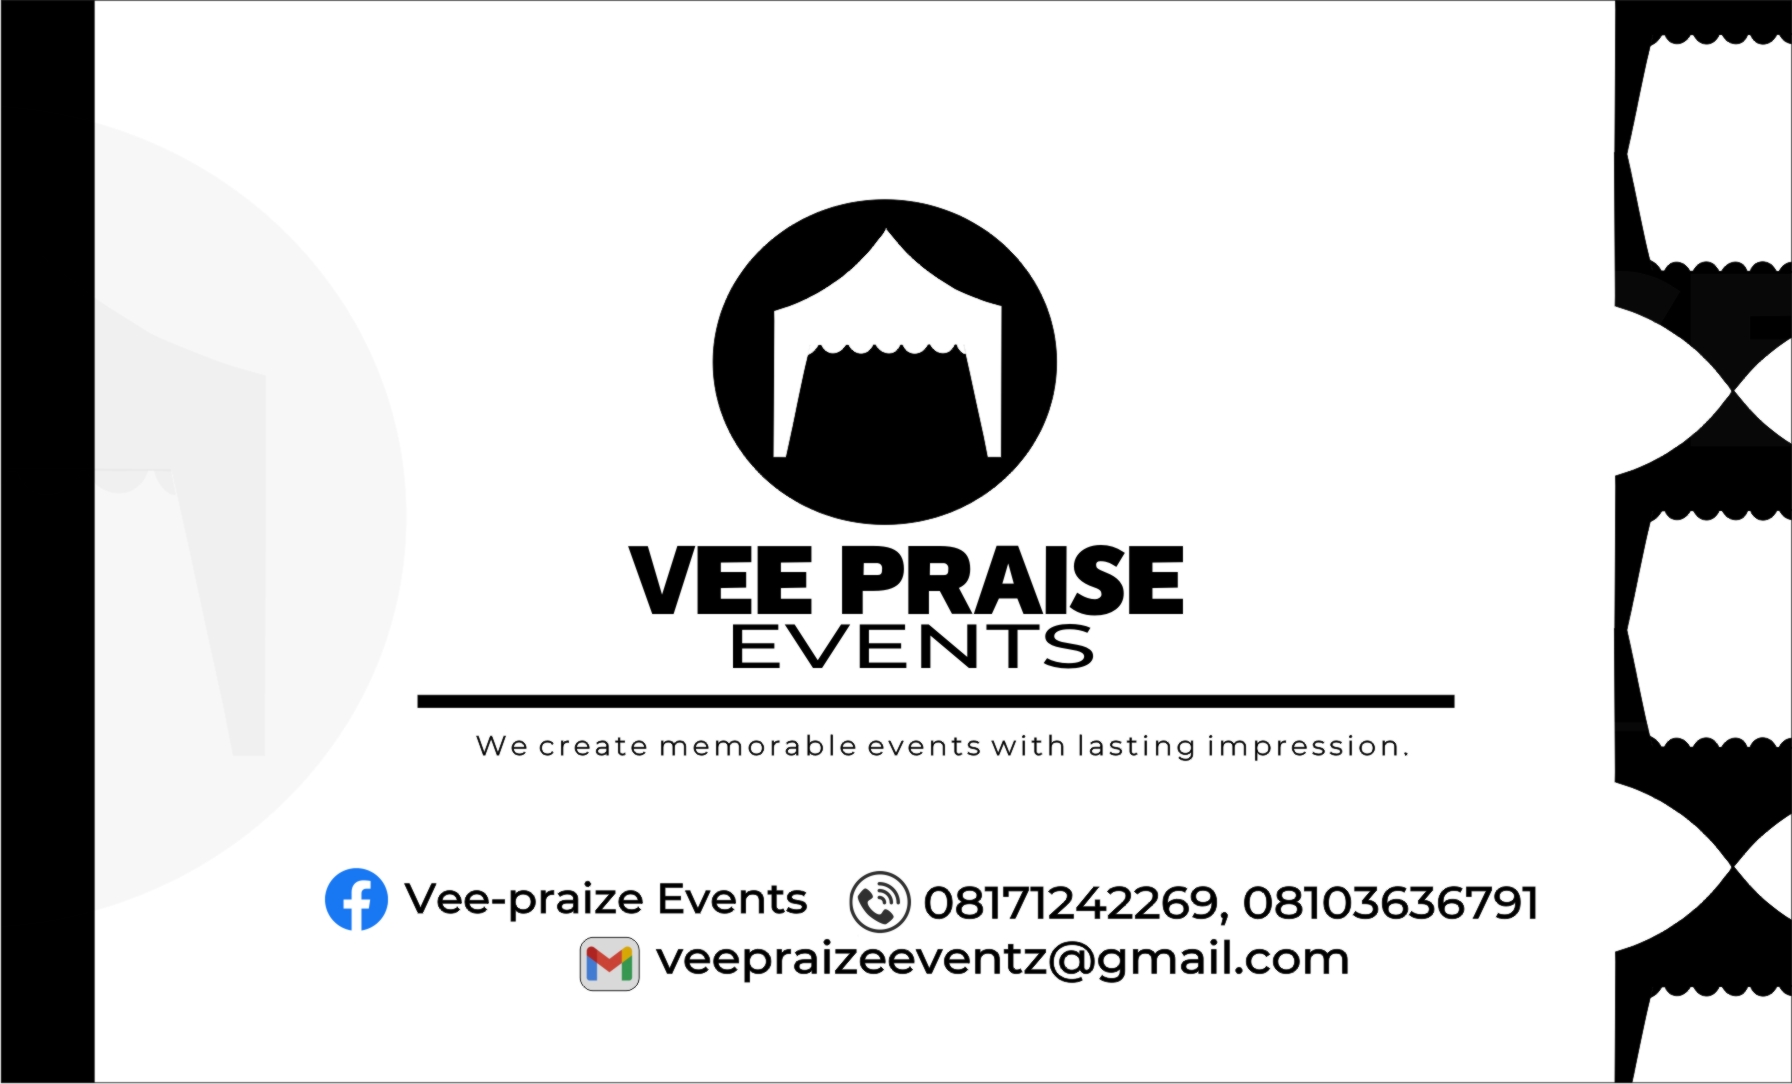 Vee-praize Events provider